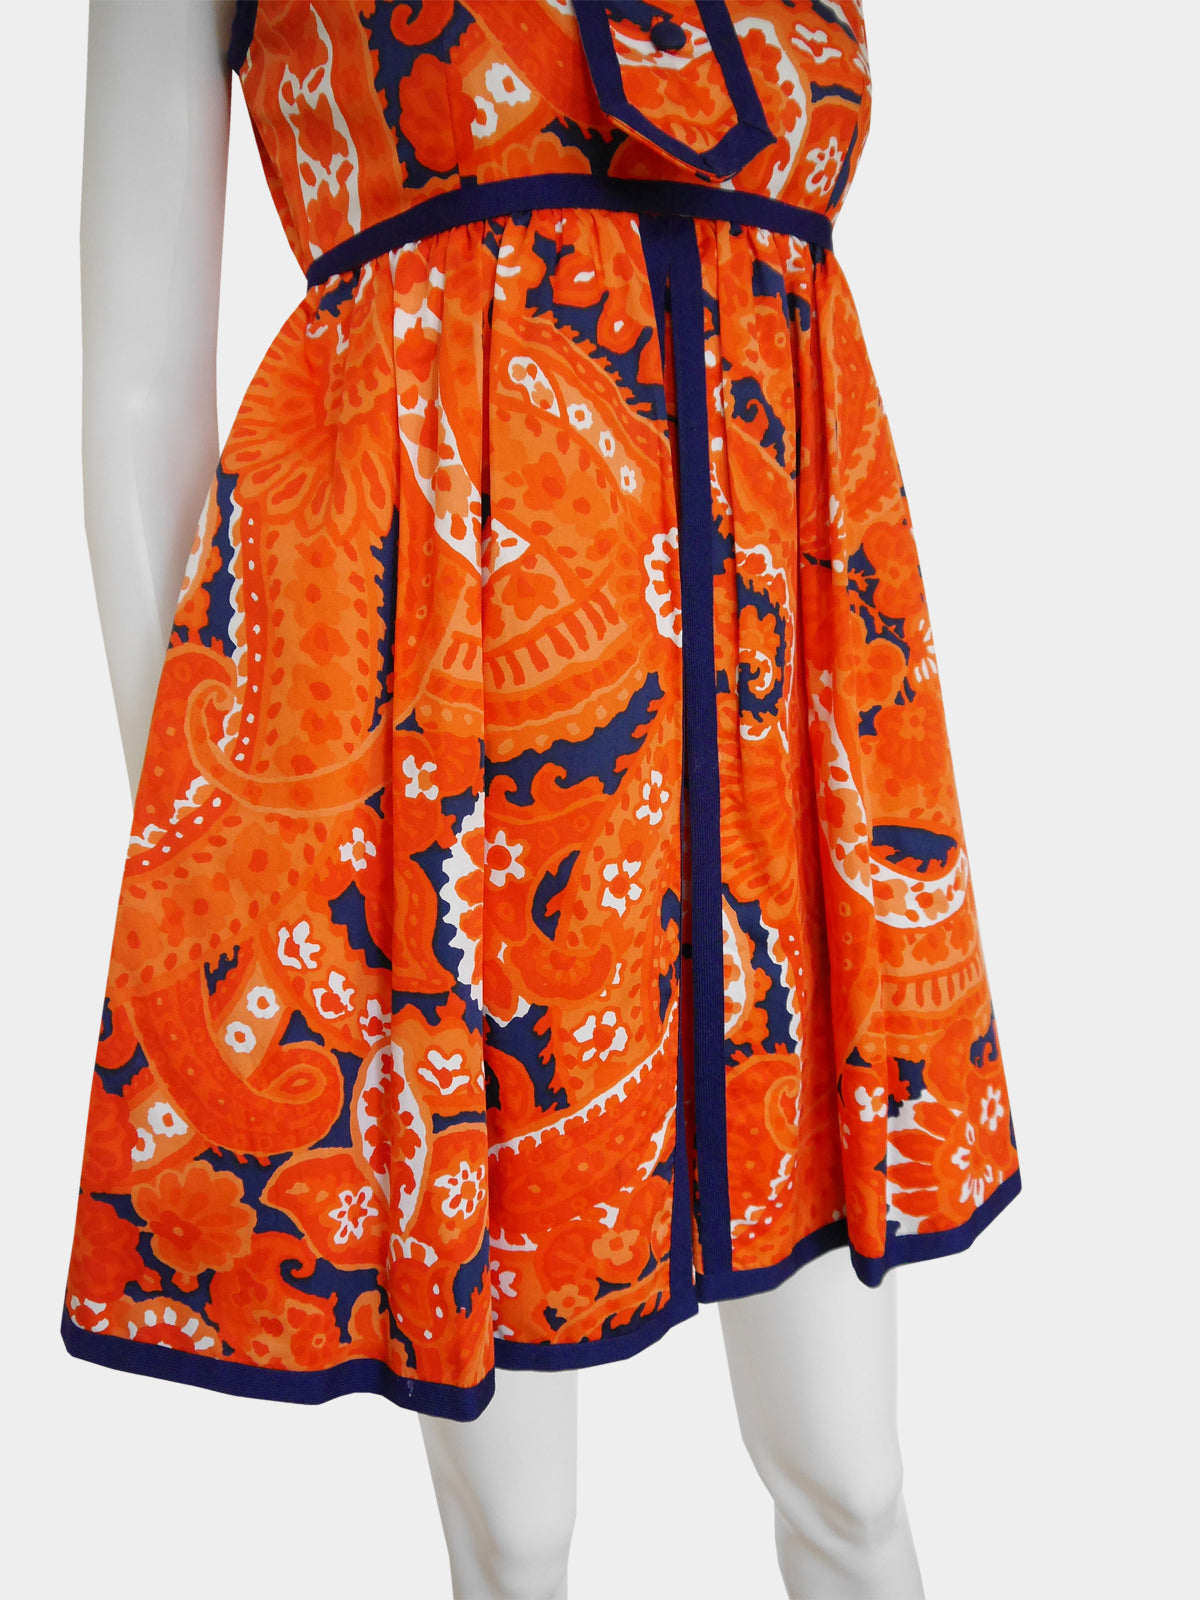 GEOFFREY BEENE Spring 1969 Vintage Mini Dress Babydoll Size XXS